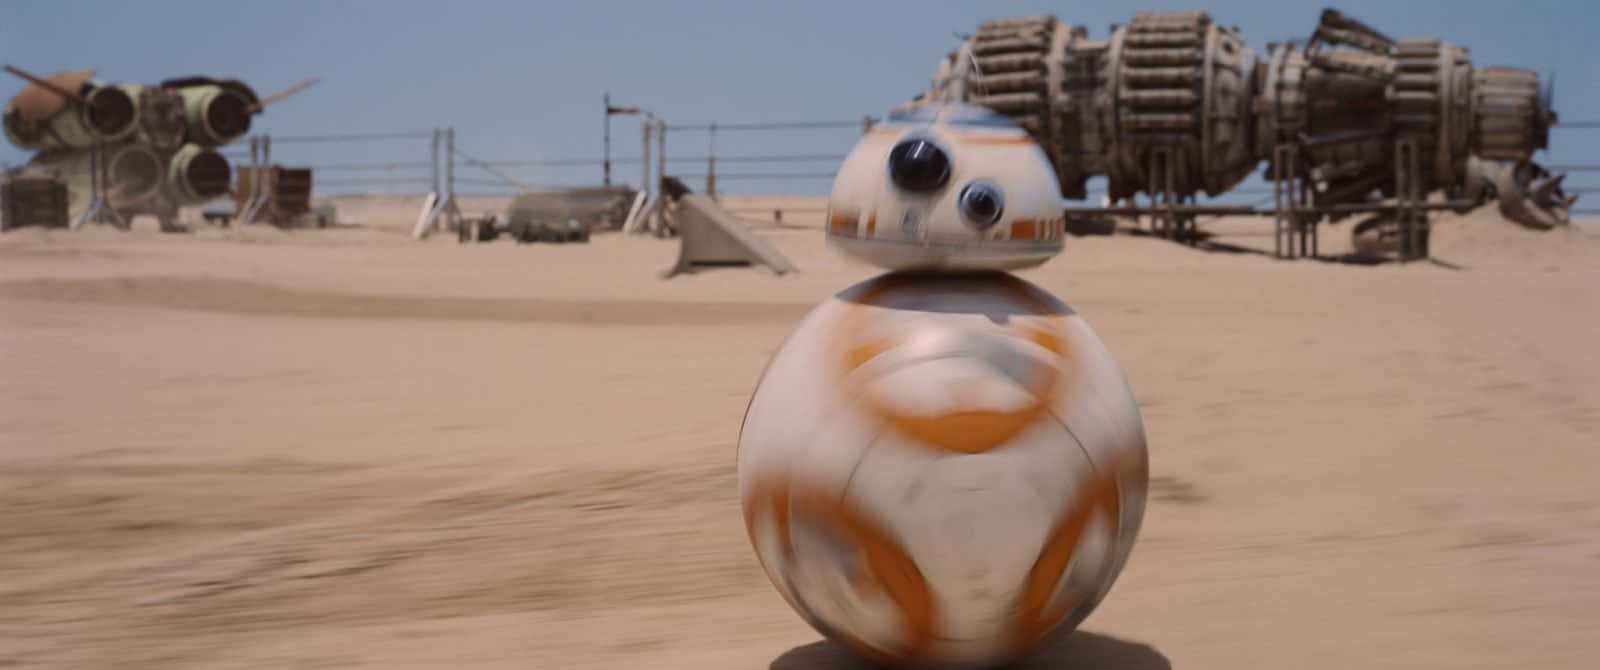 Star Wars VII The Force Awakens 39 - BB-8 on sand in Jakku